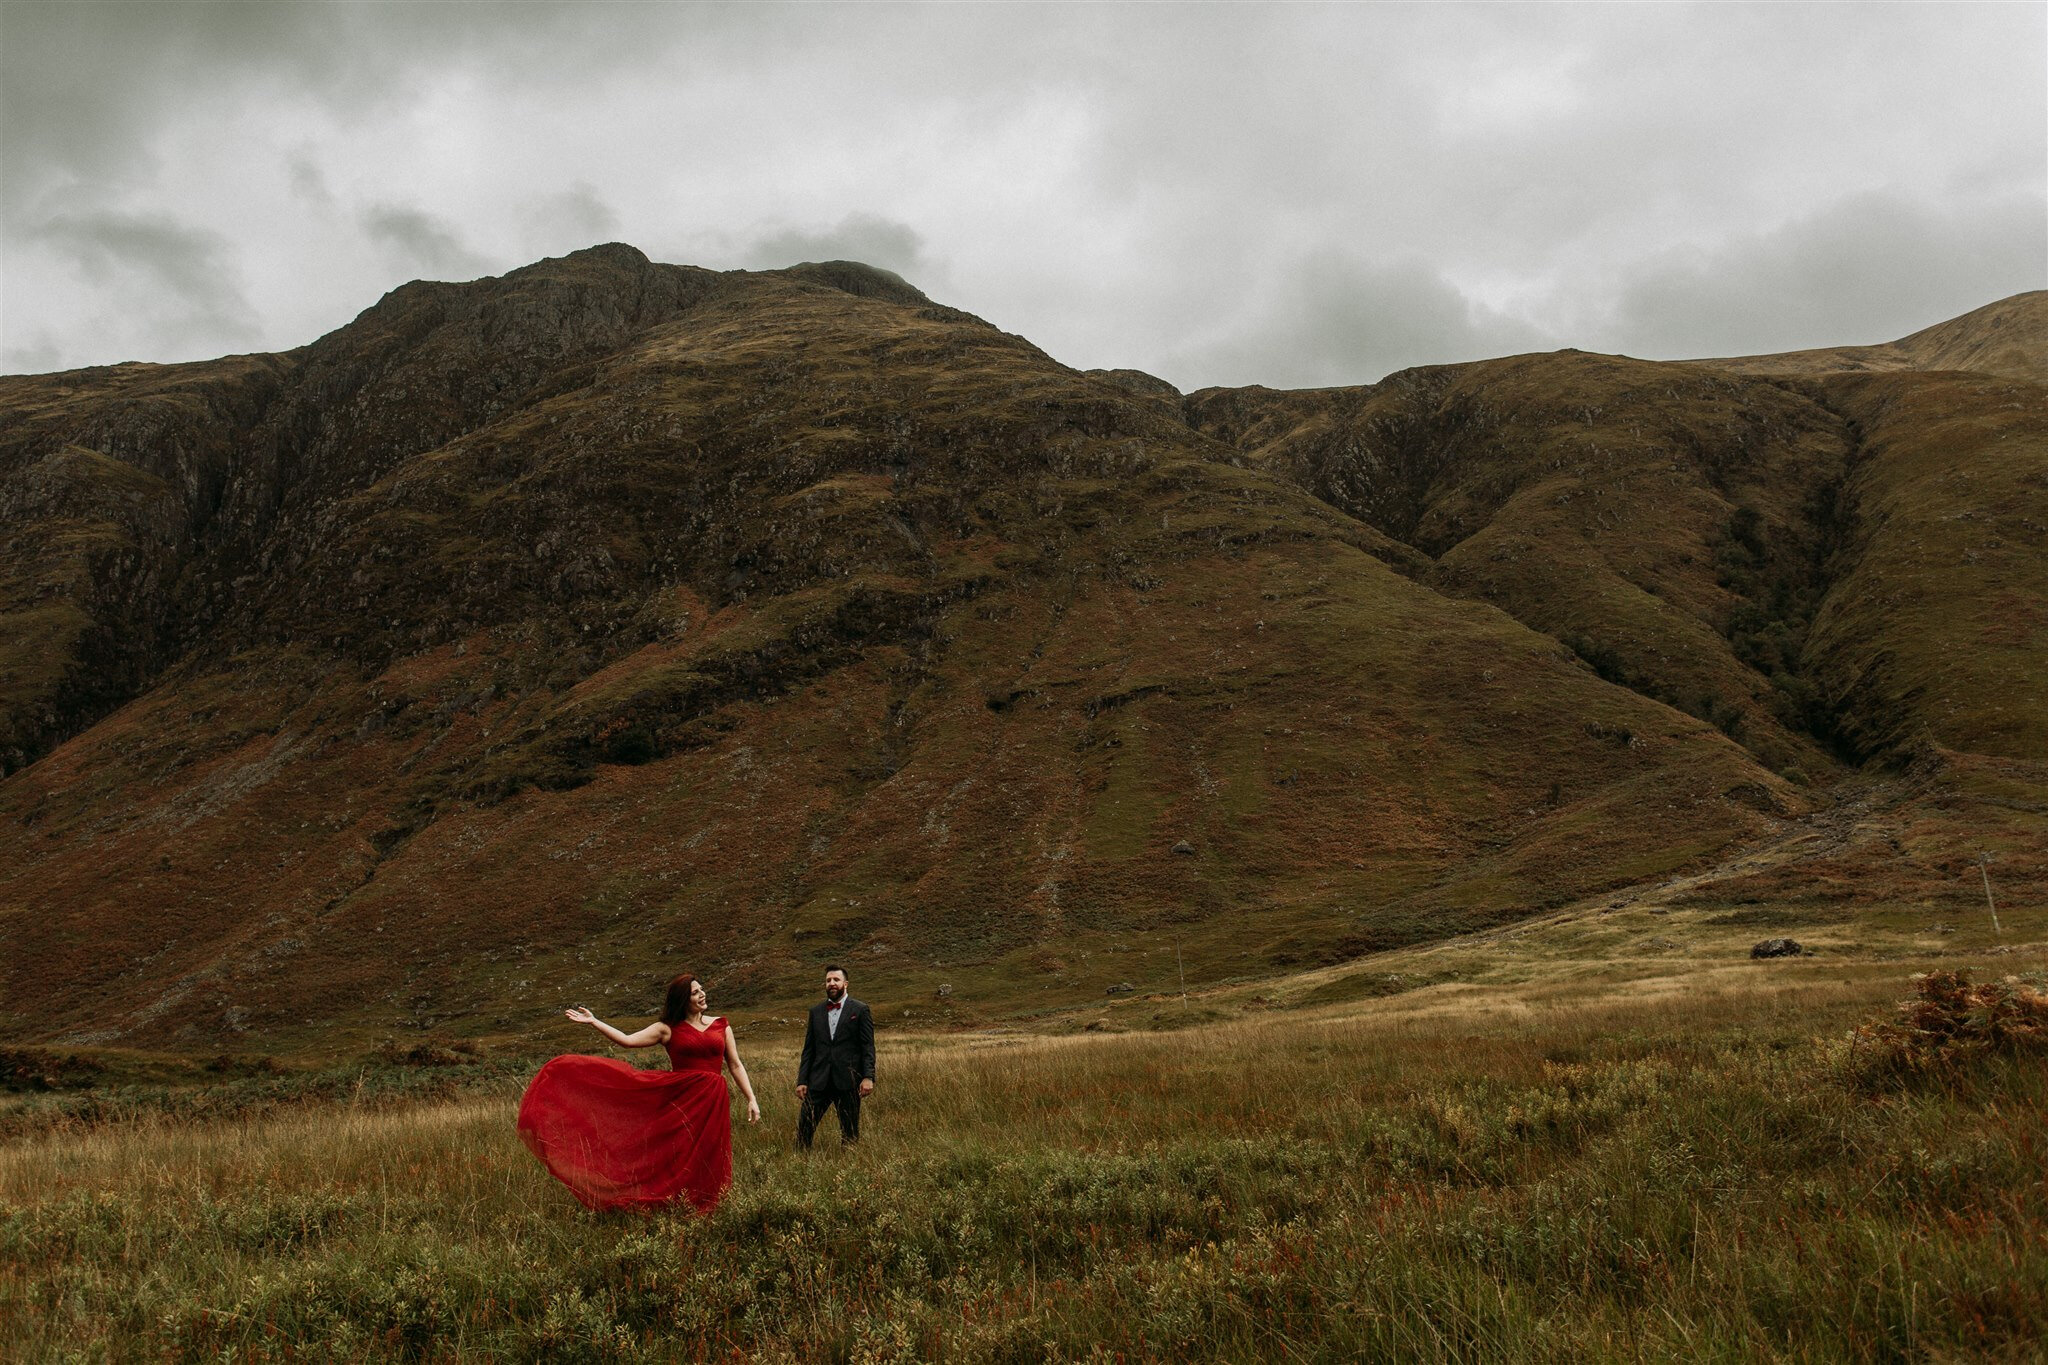 Glen Coe Scotland adventure elopement. Bride in red dress blowing in the wind stands beside her groom in the Scottish Highlands | Adventure elopement photographer